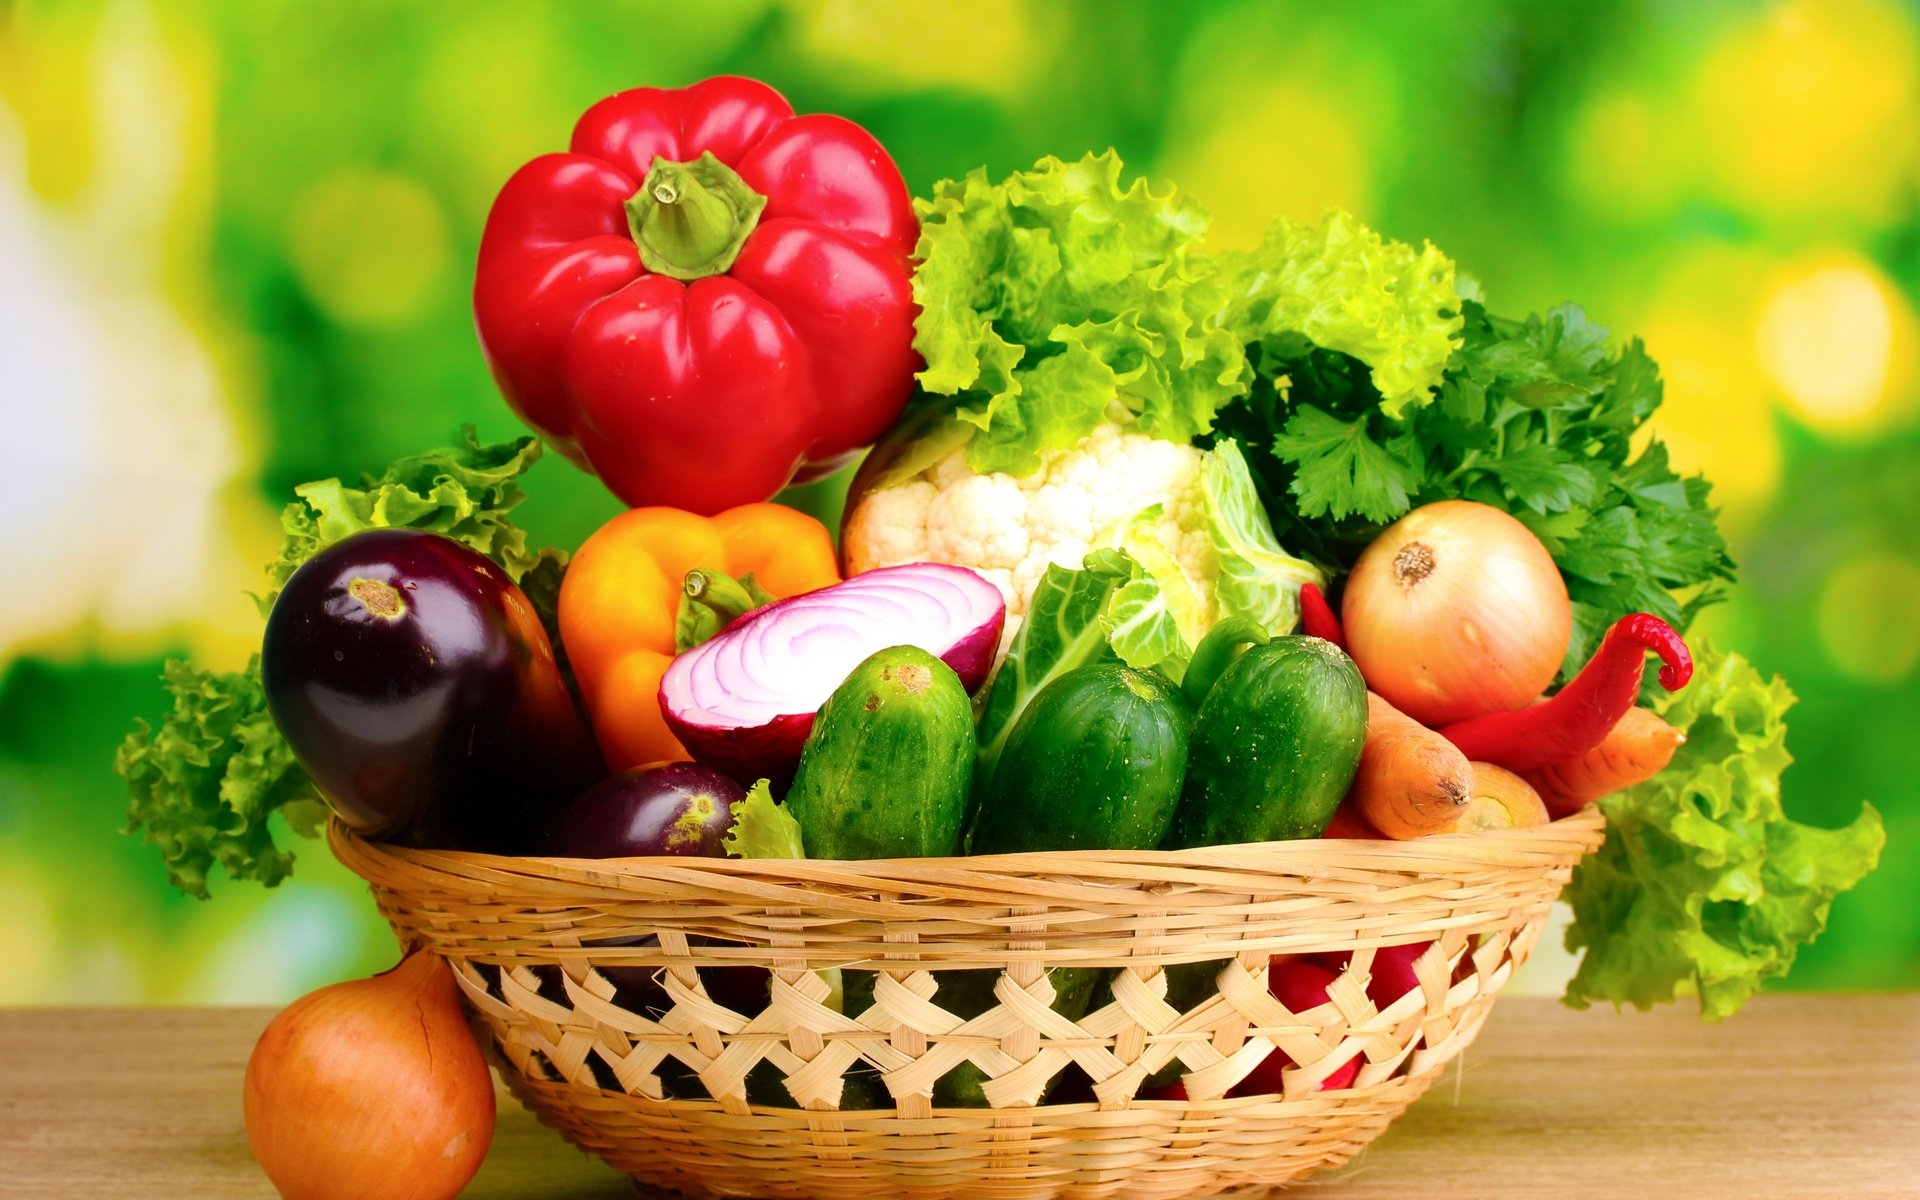 Vegetables pictures. Овощи и фрукты. Красивые овощи. Свежие овощи и фрукты. Корзинка с овощами.